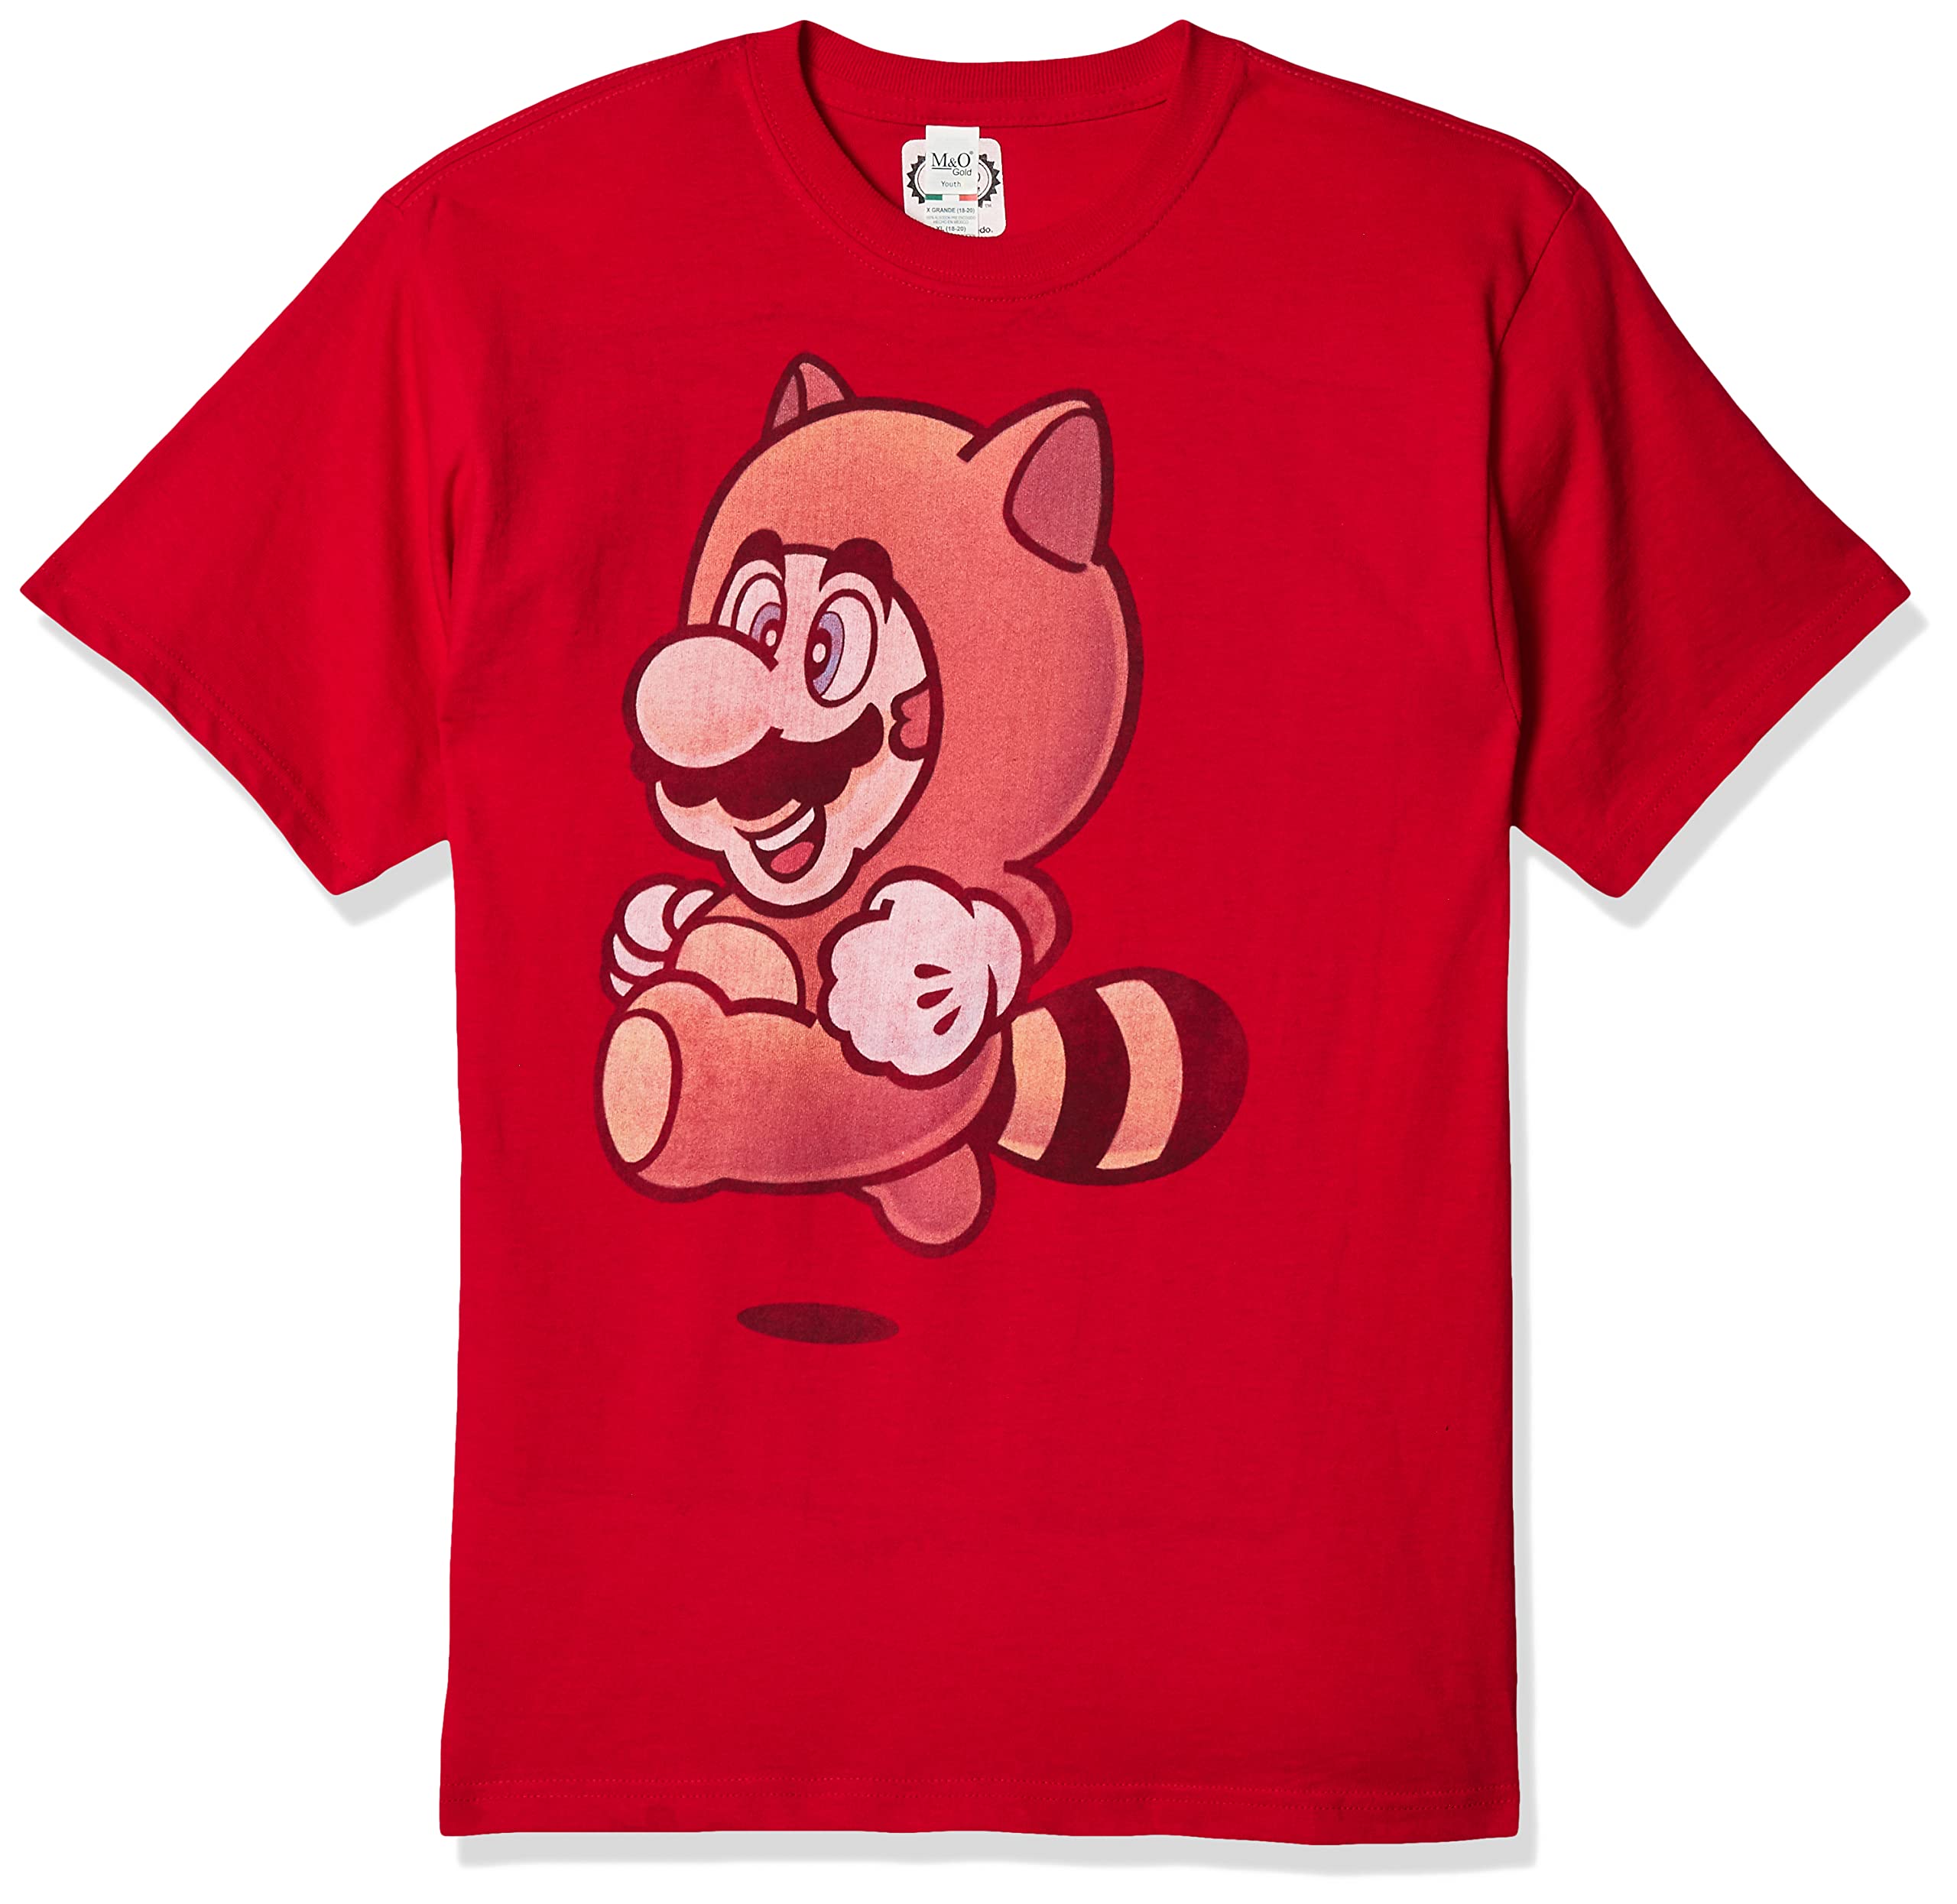 Nintendo Boys' Super Mario Tanooki Mario Yeah Graphic T-shirt